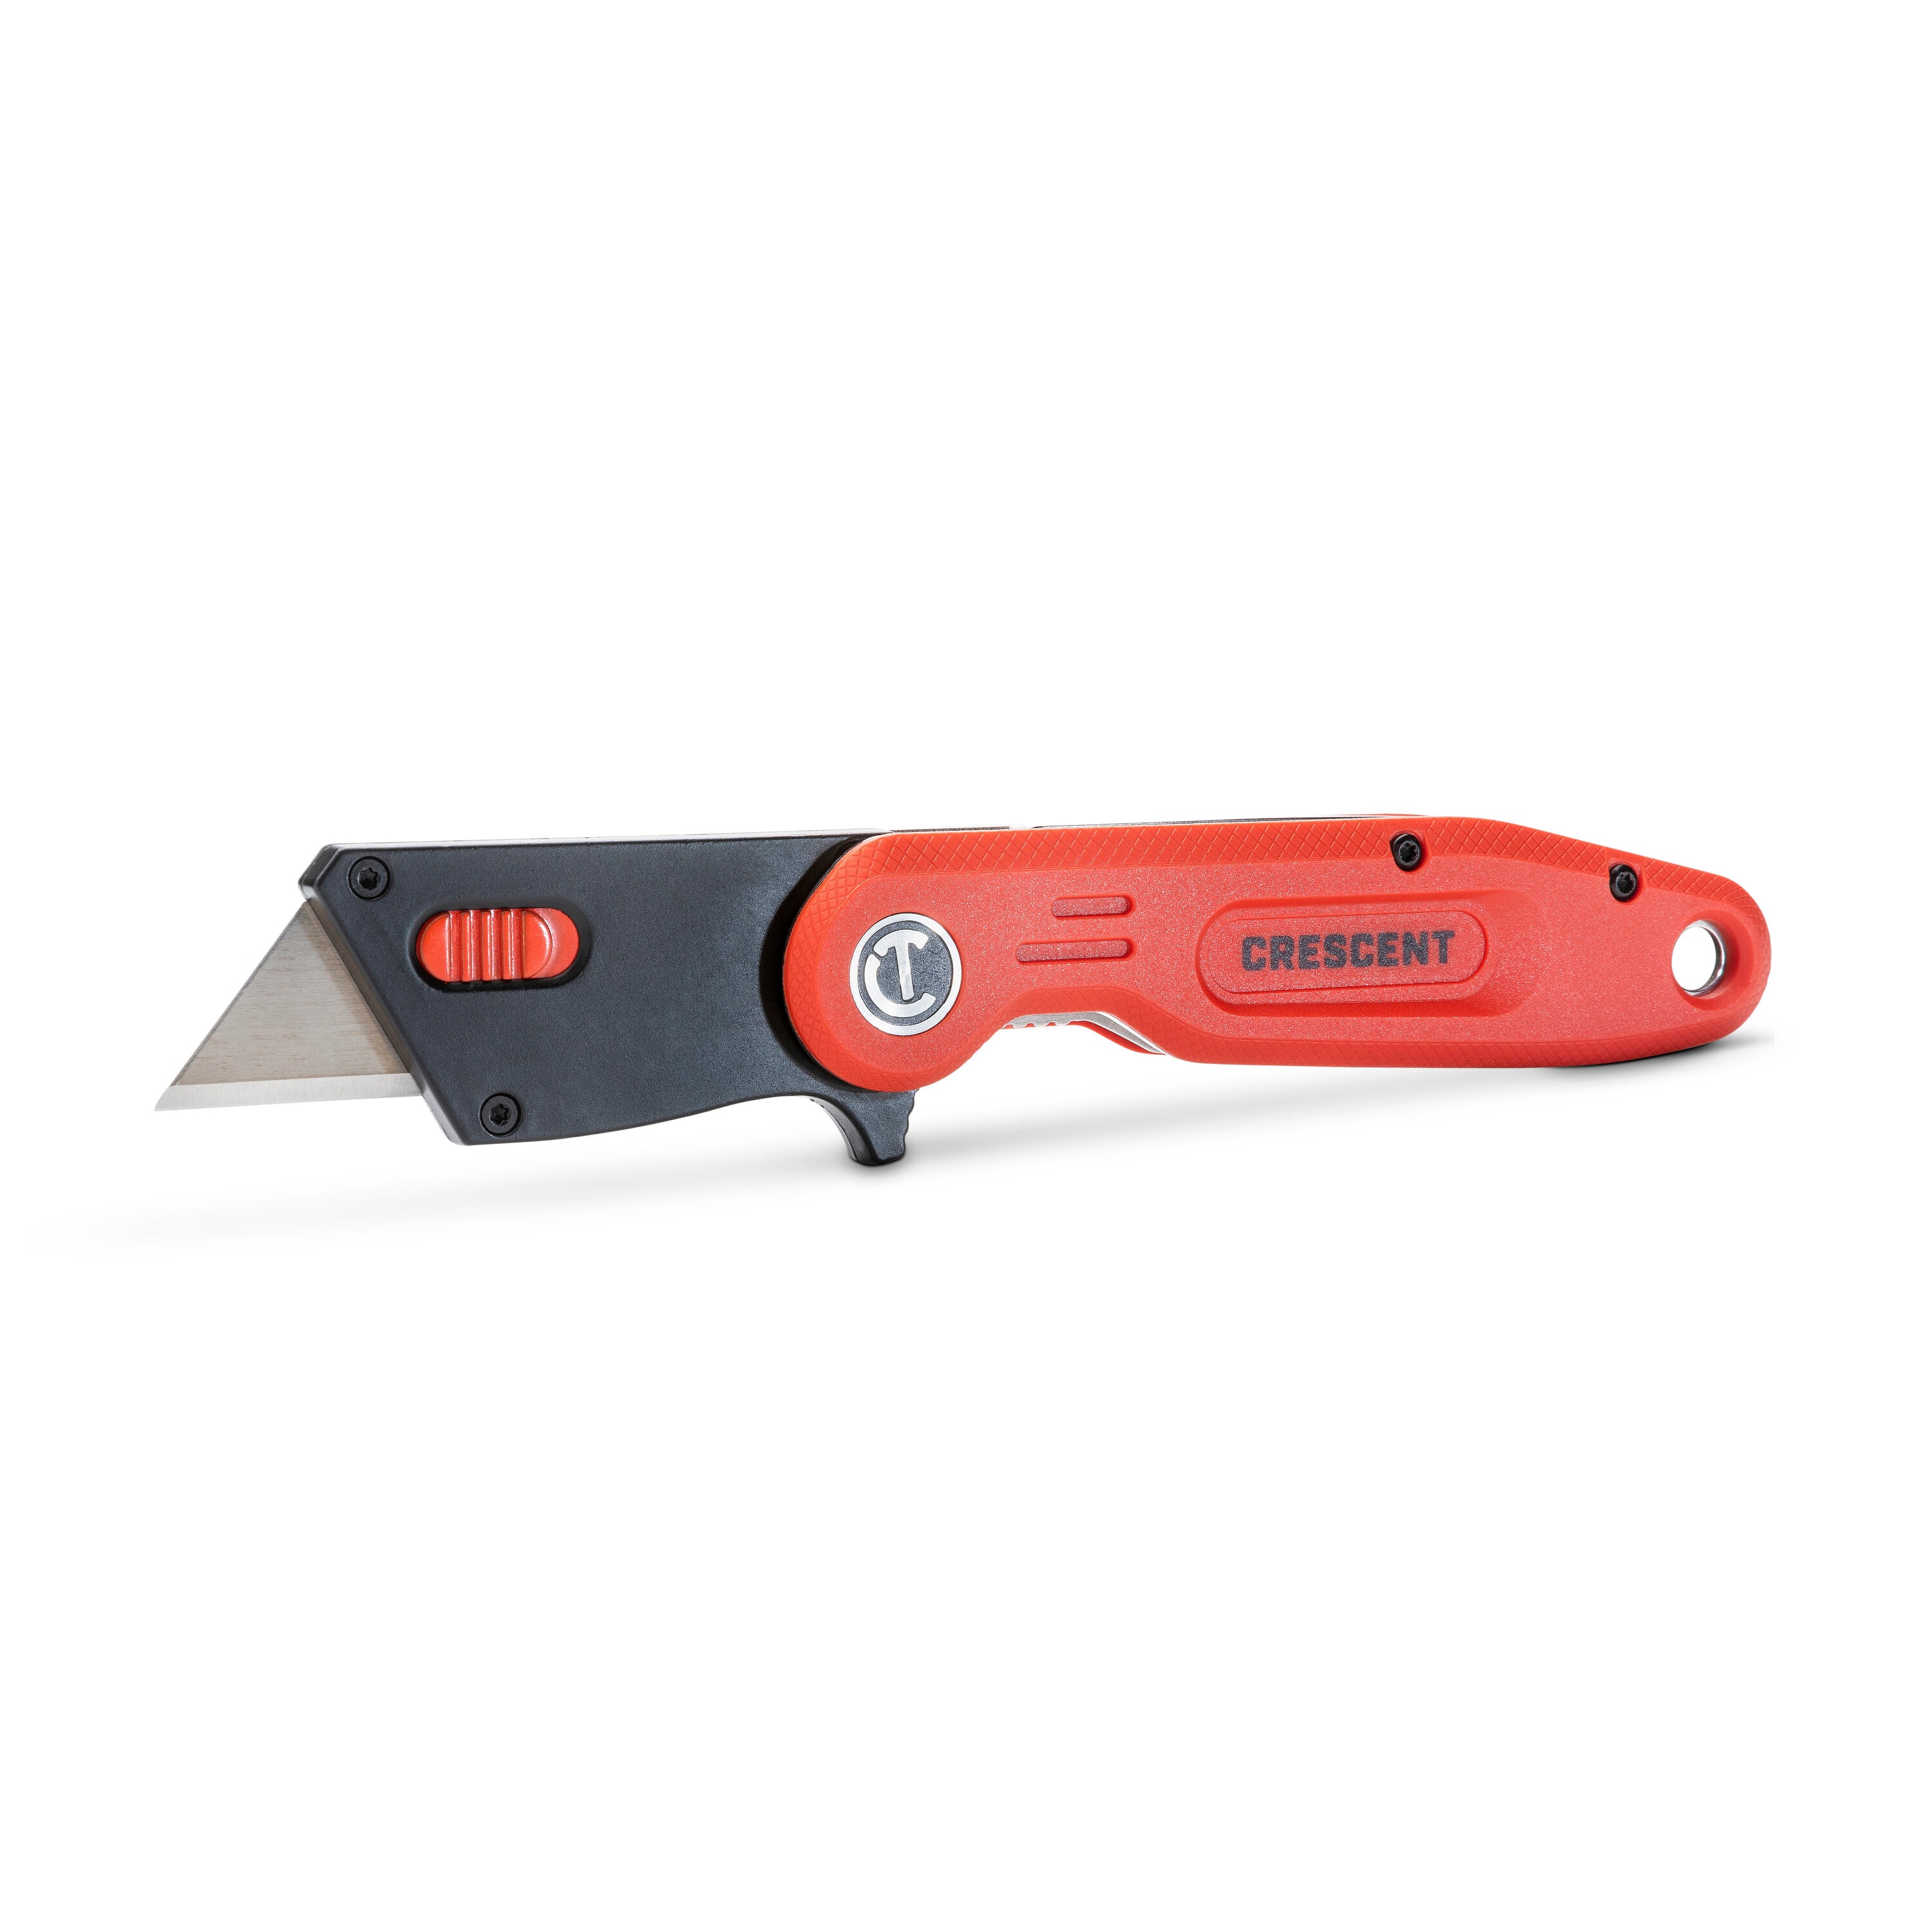 Office, 2in1 Box Resizer Scorer Cutter Knife Tool New